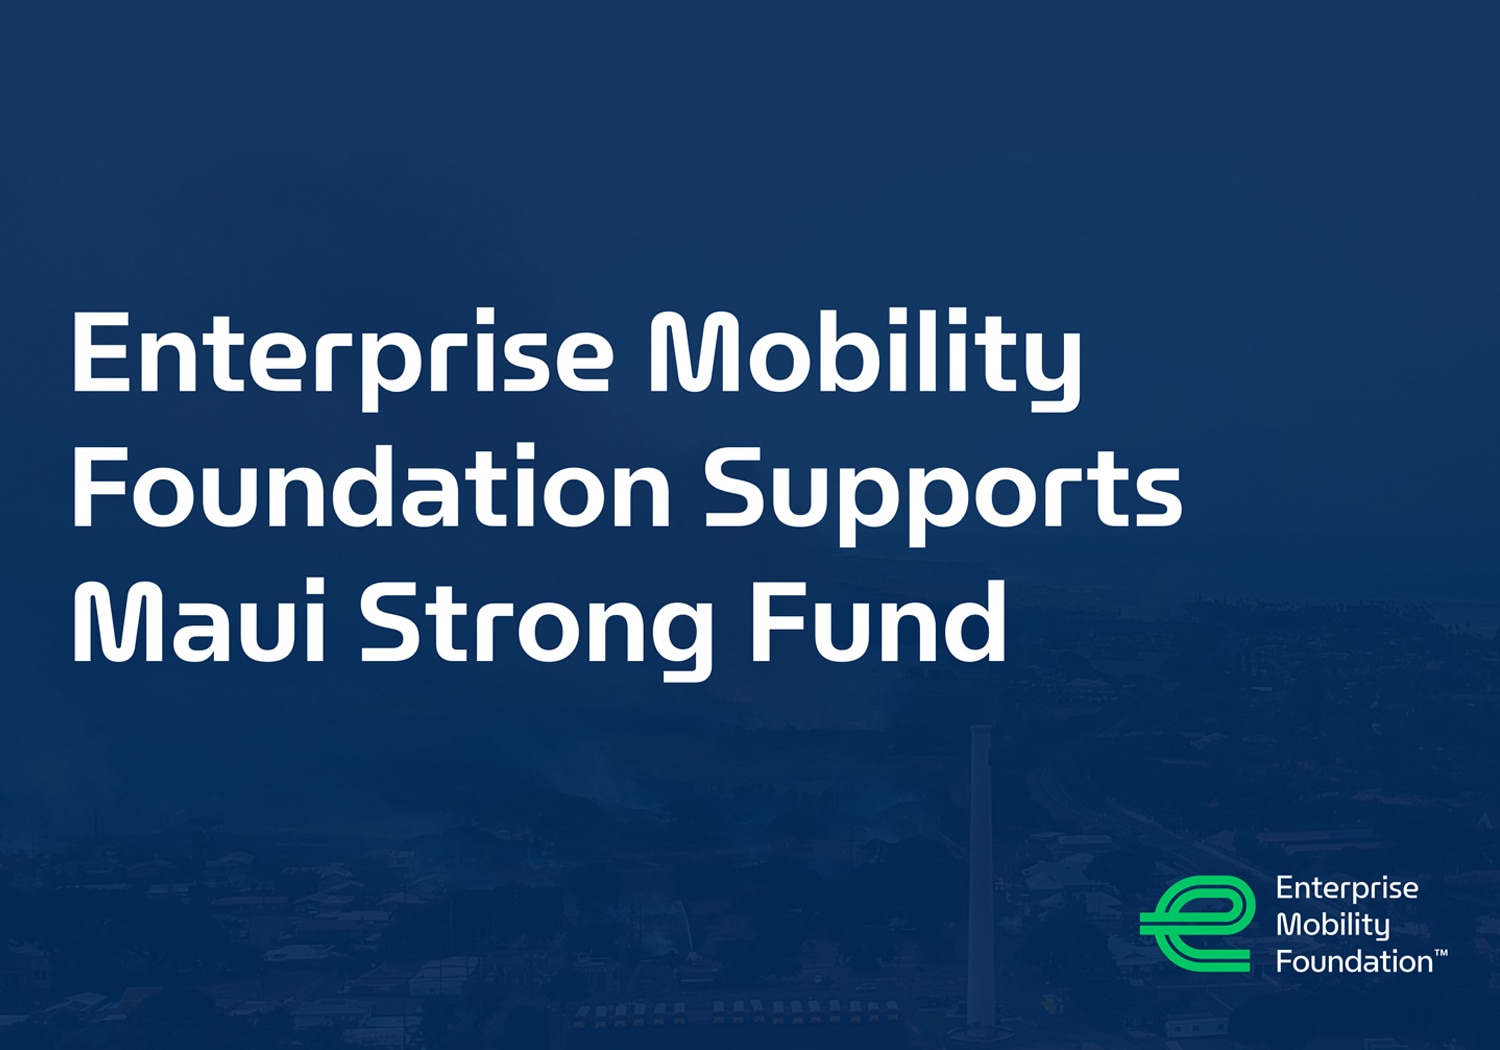 Enterprise Mobility Foundation Announces $250K Grant to Hawaii Community Foundation